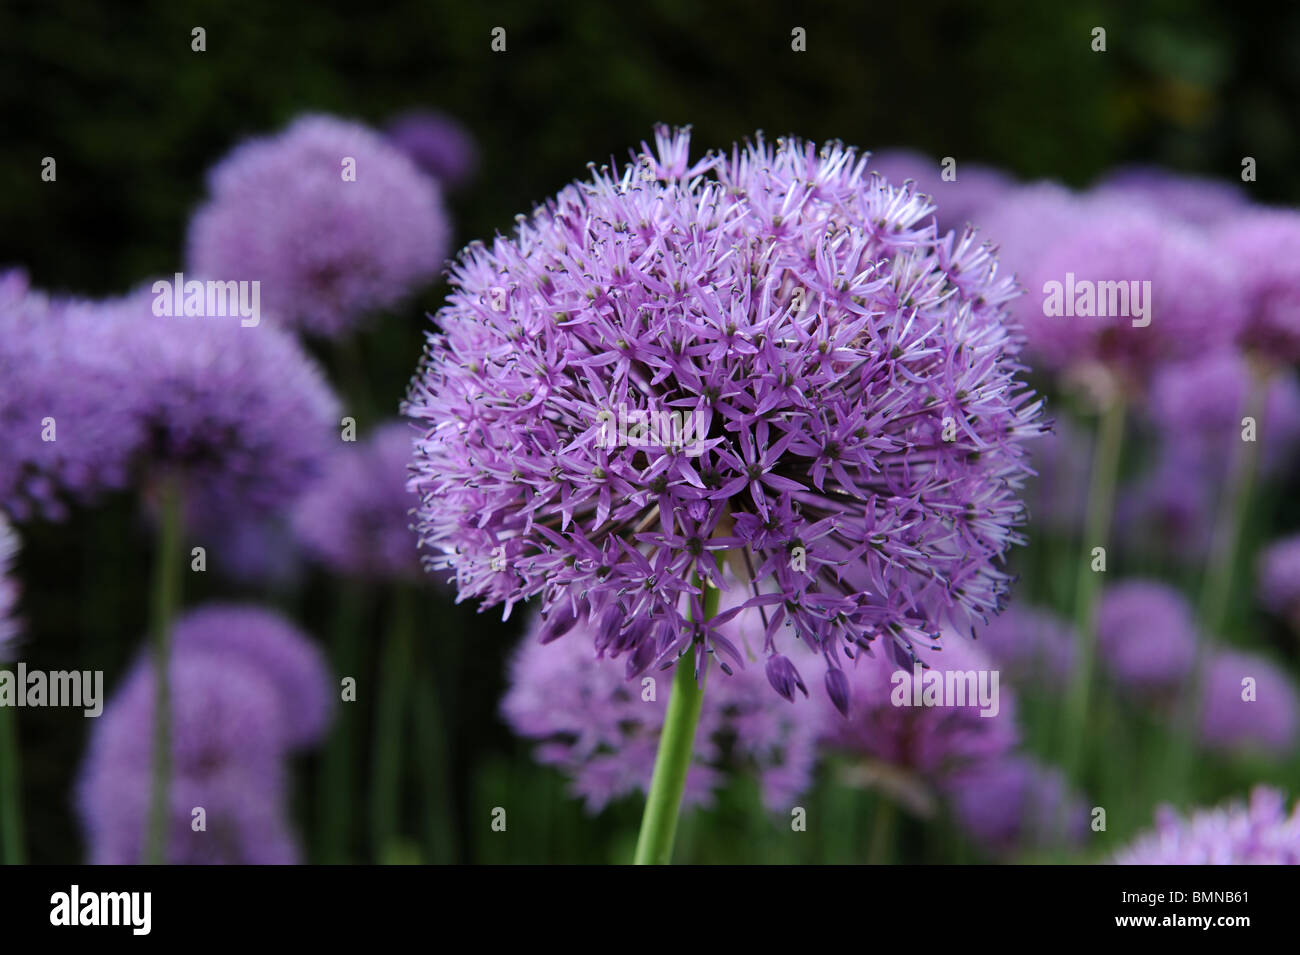 Allium Hollandicum viola sensazione di cipolla ornamentali in fiore Foto Stock